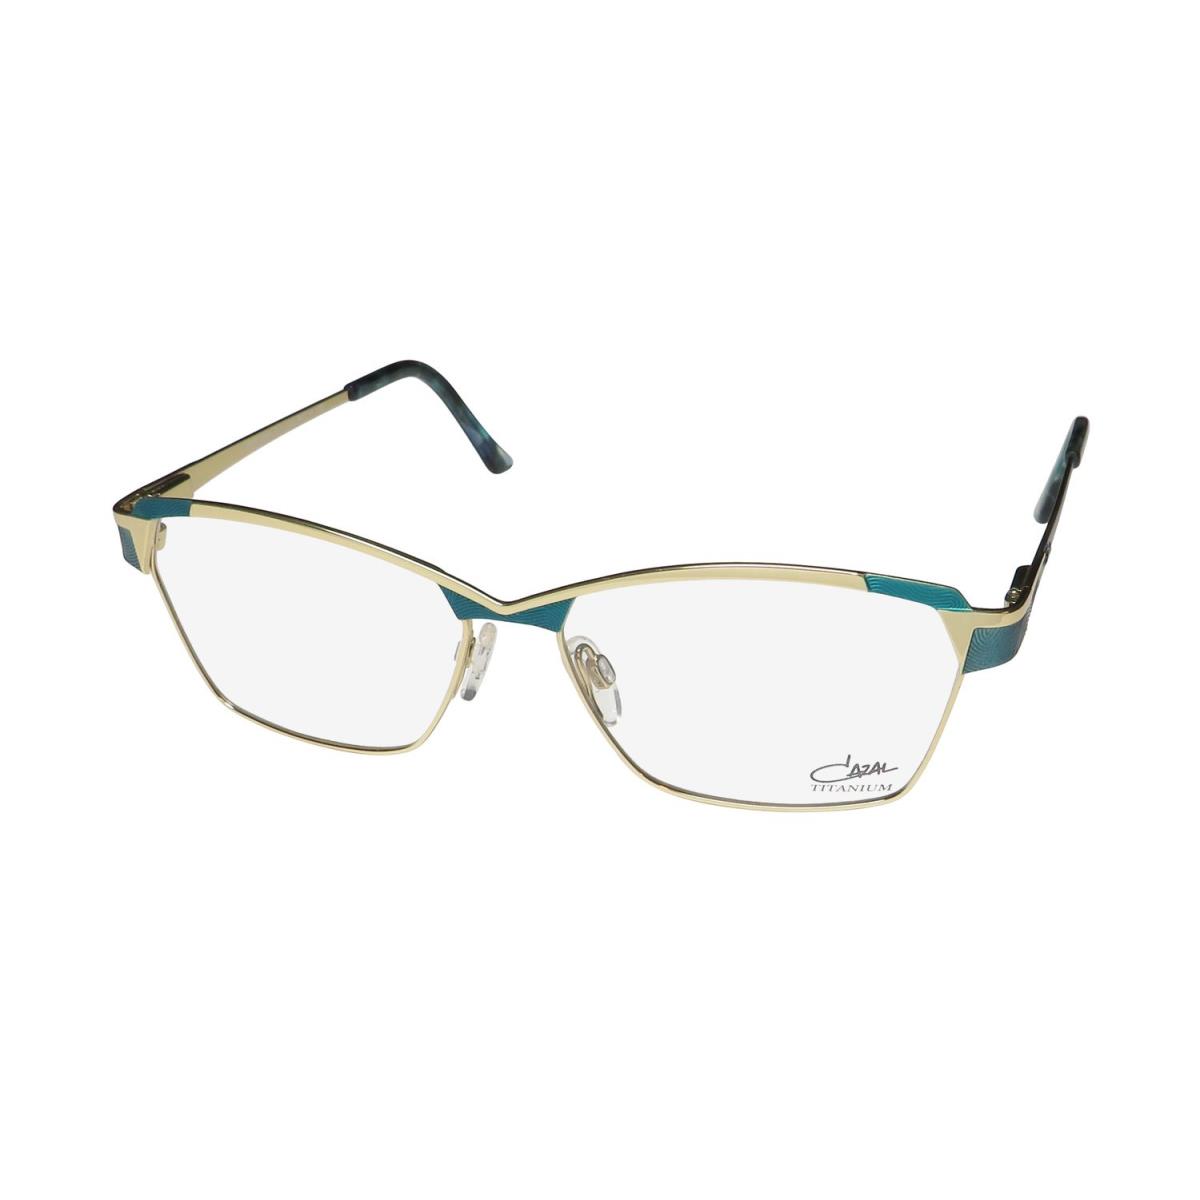 Cazal 4285 Titanium Metal NO Allergy Materials Premium Eyeglass Frame/eyewear Gold / Teal